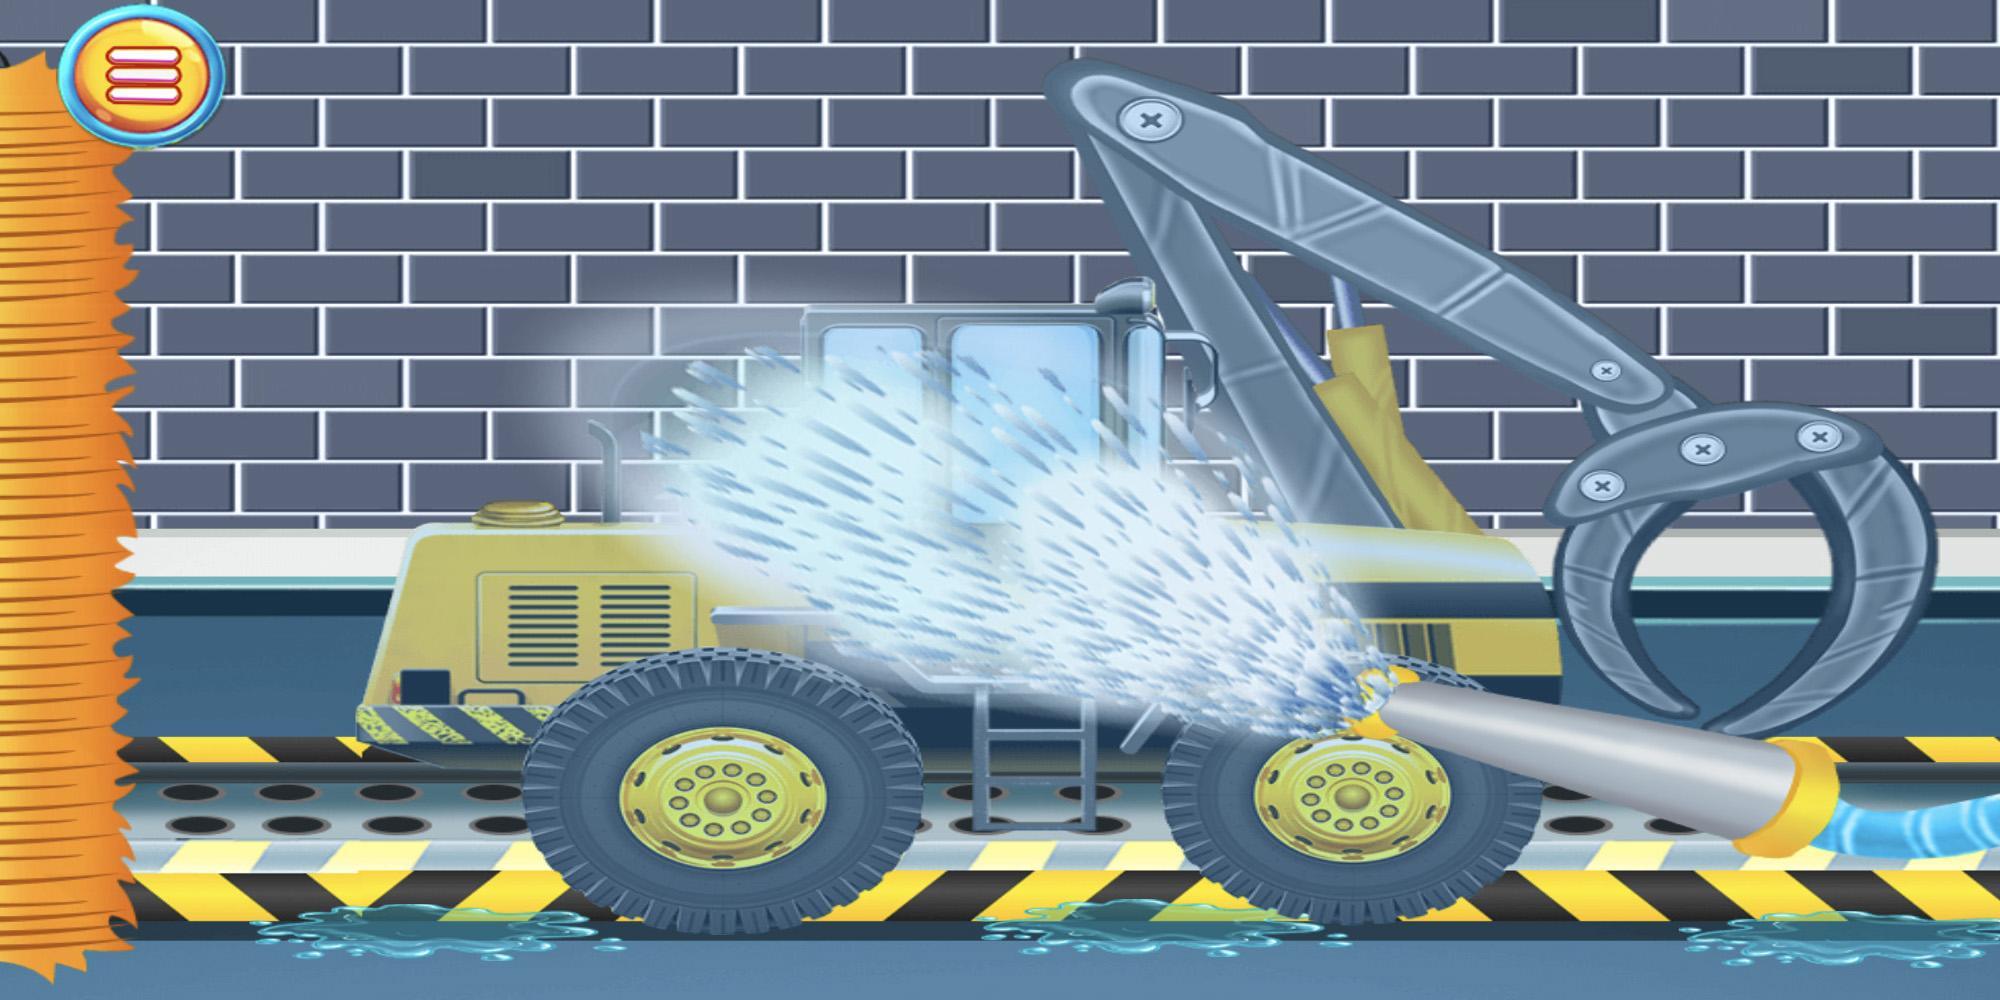 Construction Vehicles & Trucks - Games for Kids 1.9.0 Screenshot 6